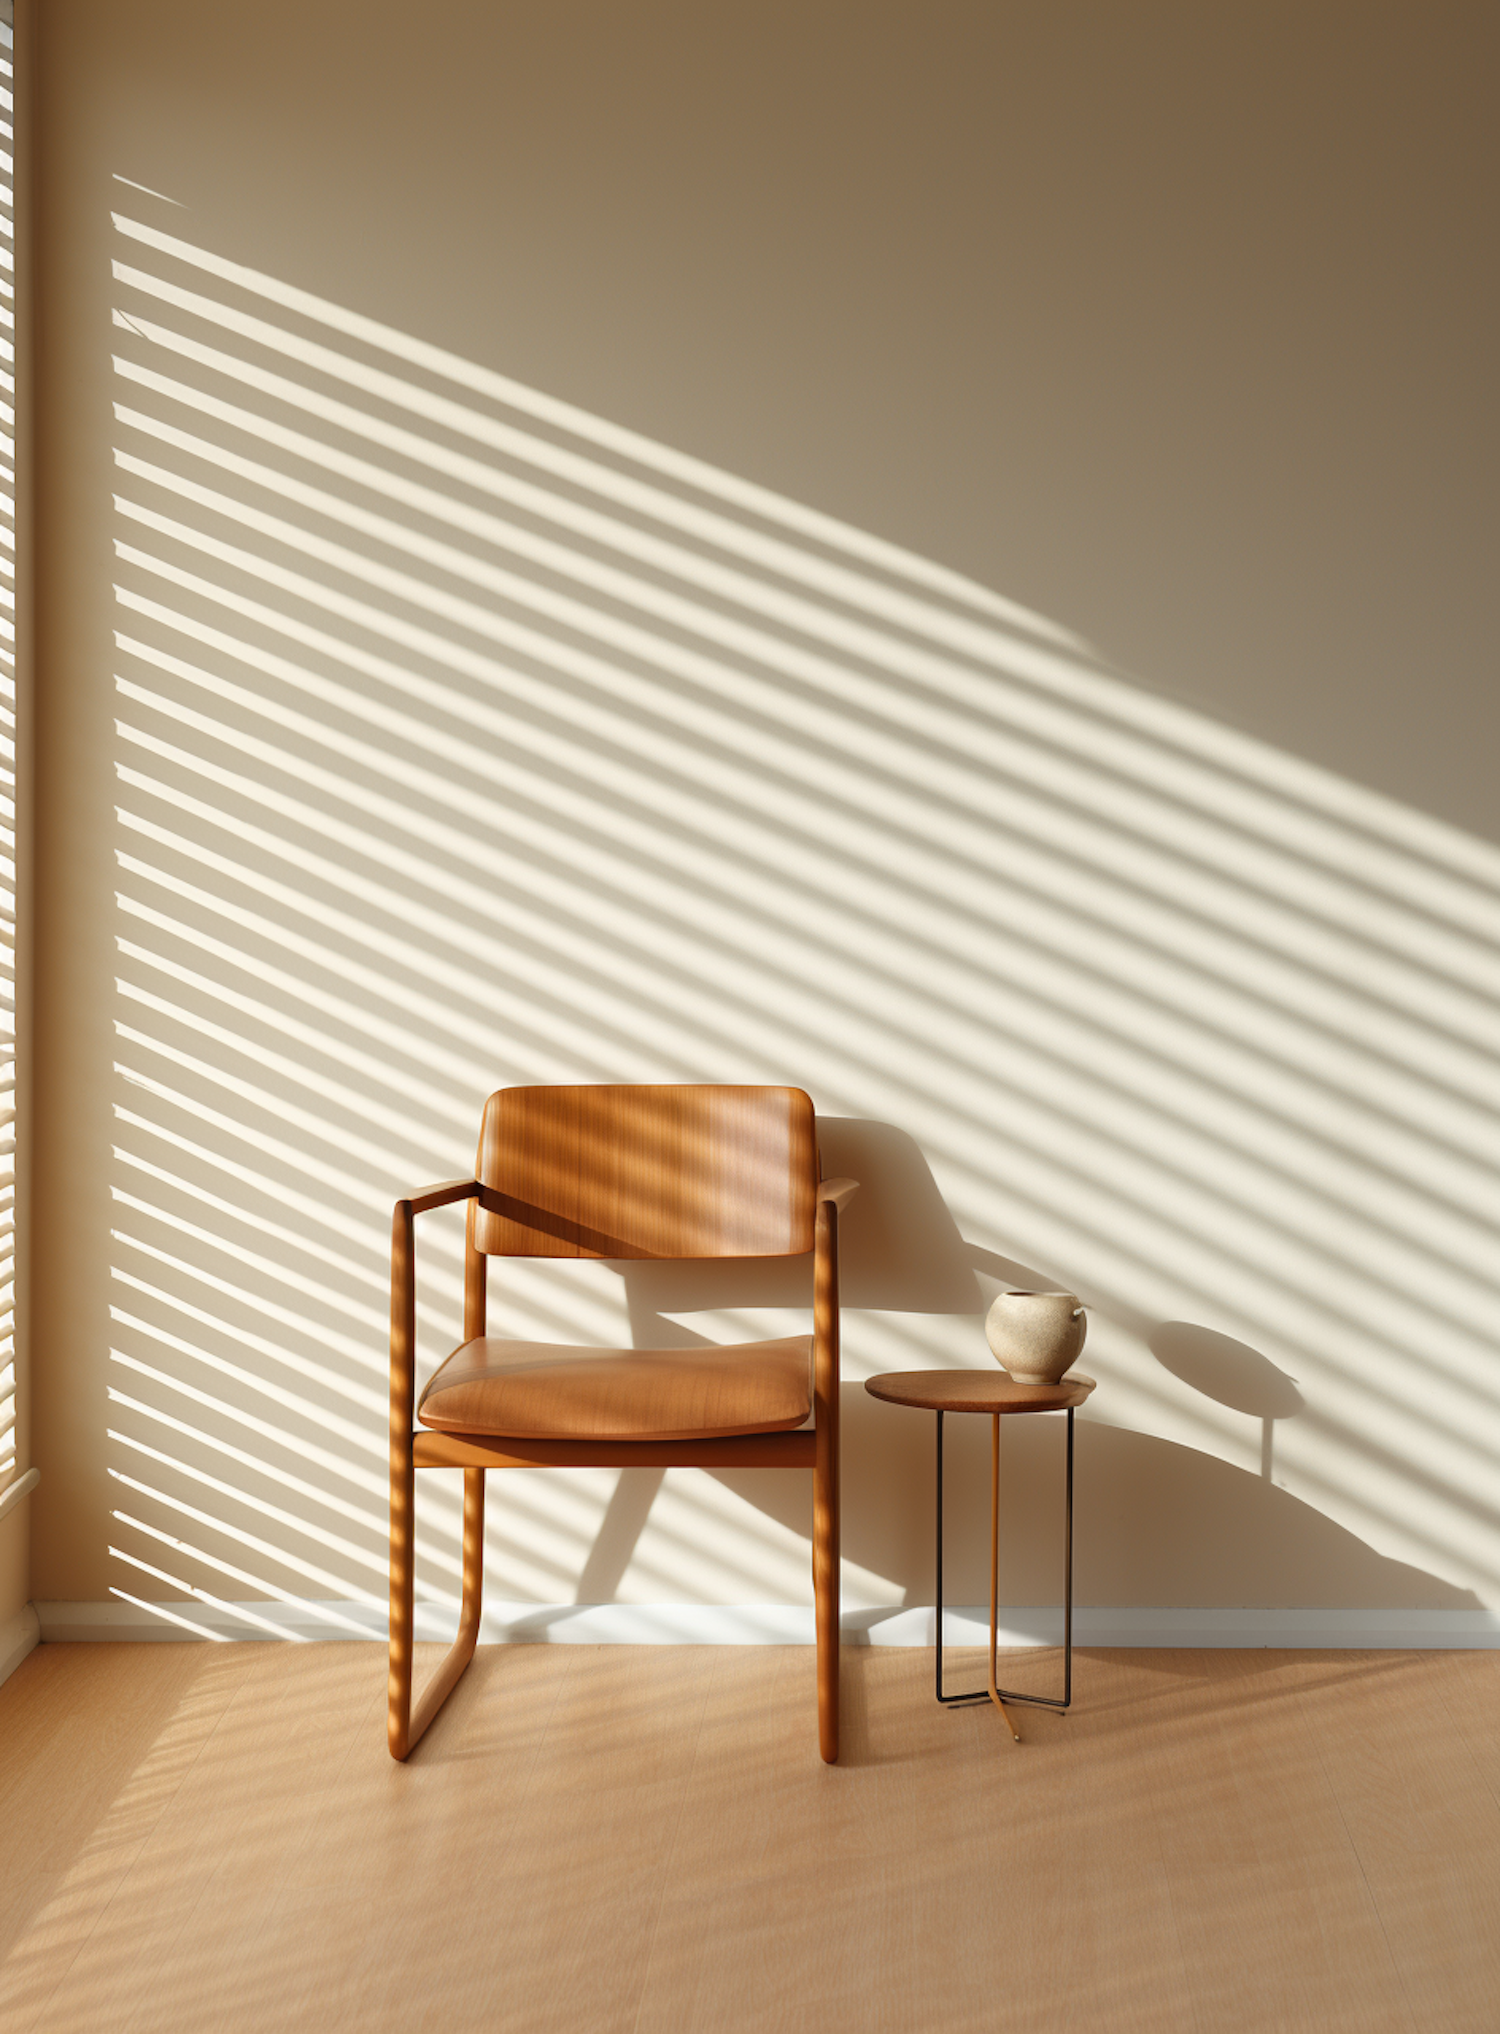 Scandinavian Serenity: Modern Wooden Chair and Shadow Play